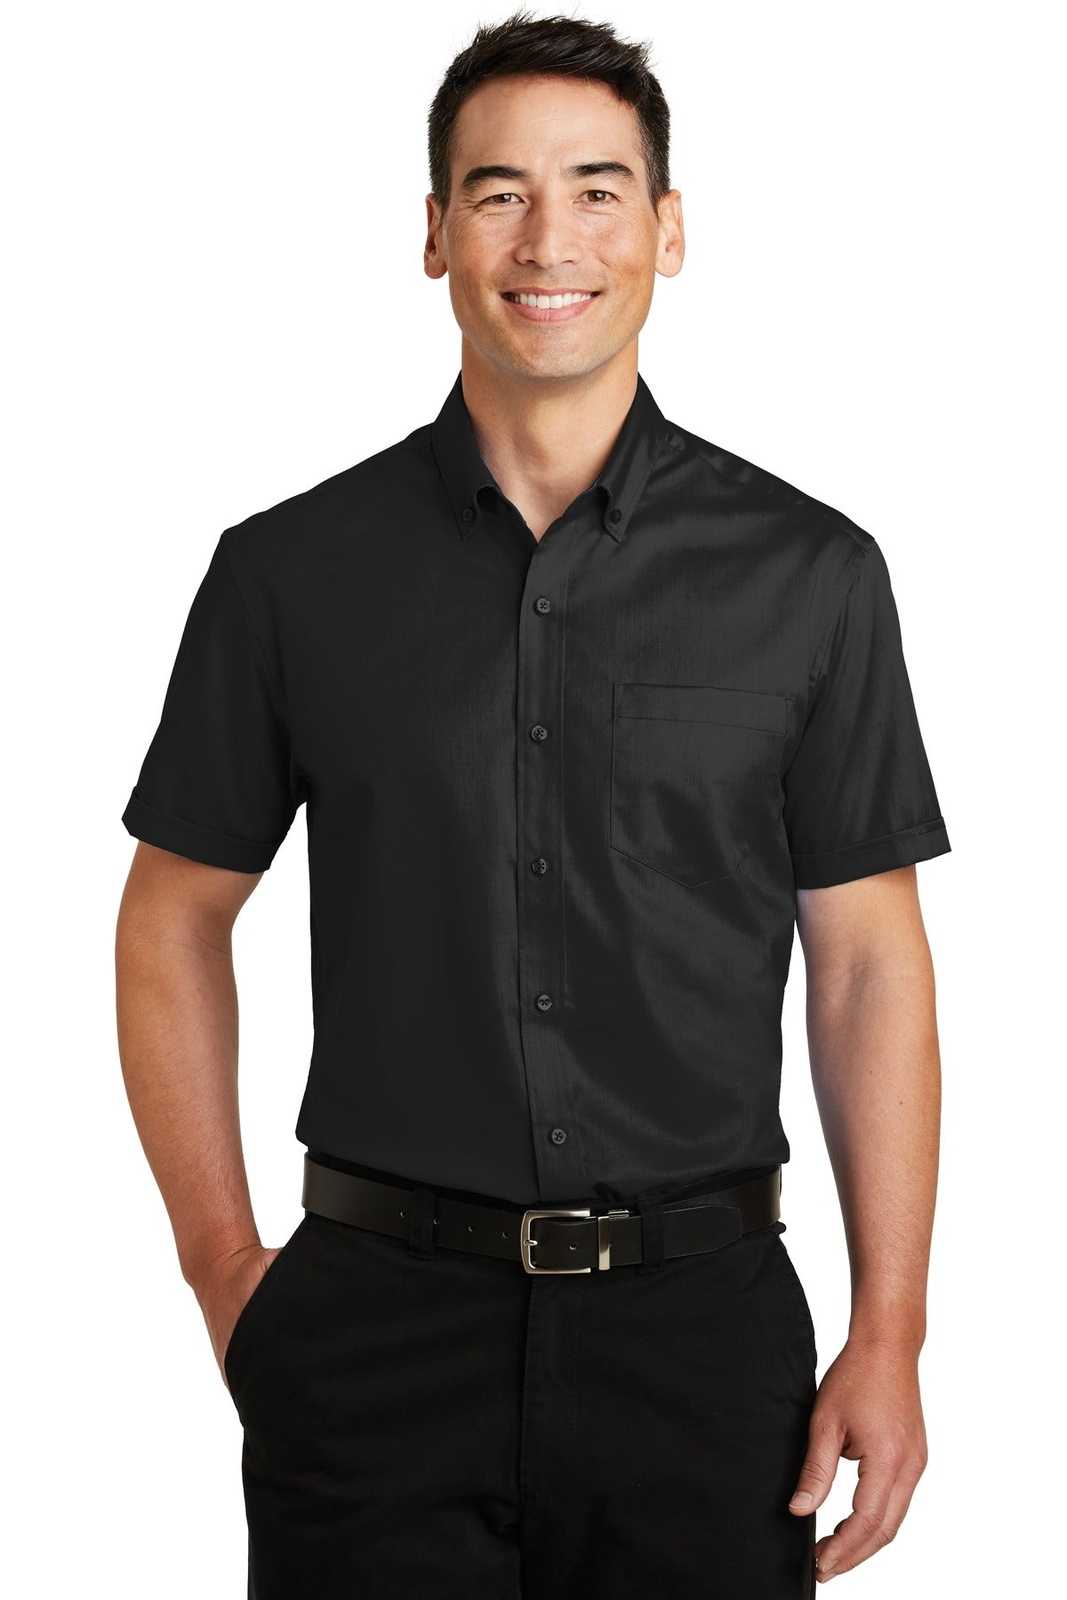 Port Authority S664 Short Sleeve Superpro Twill Shirt - Black - HIT a Double - 1